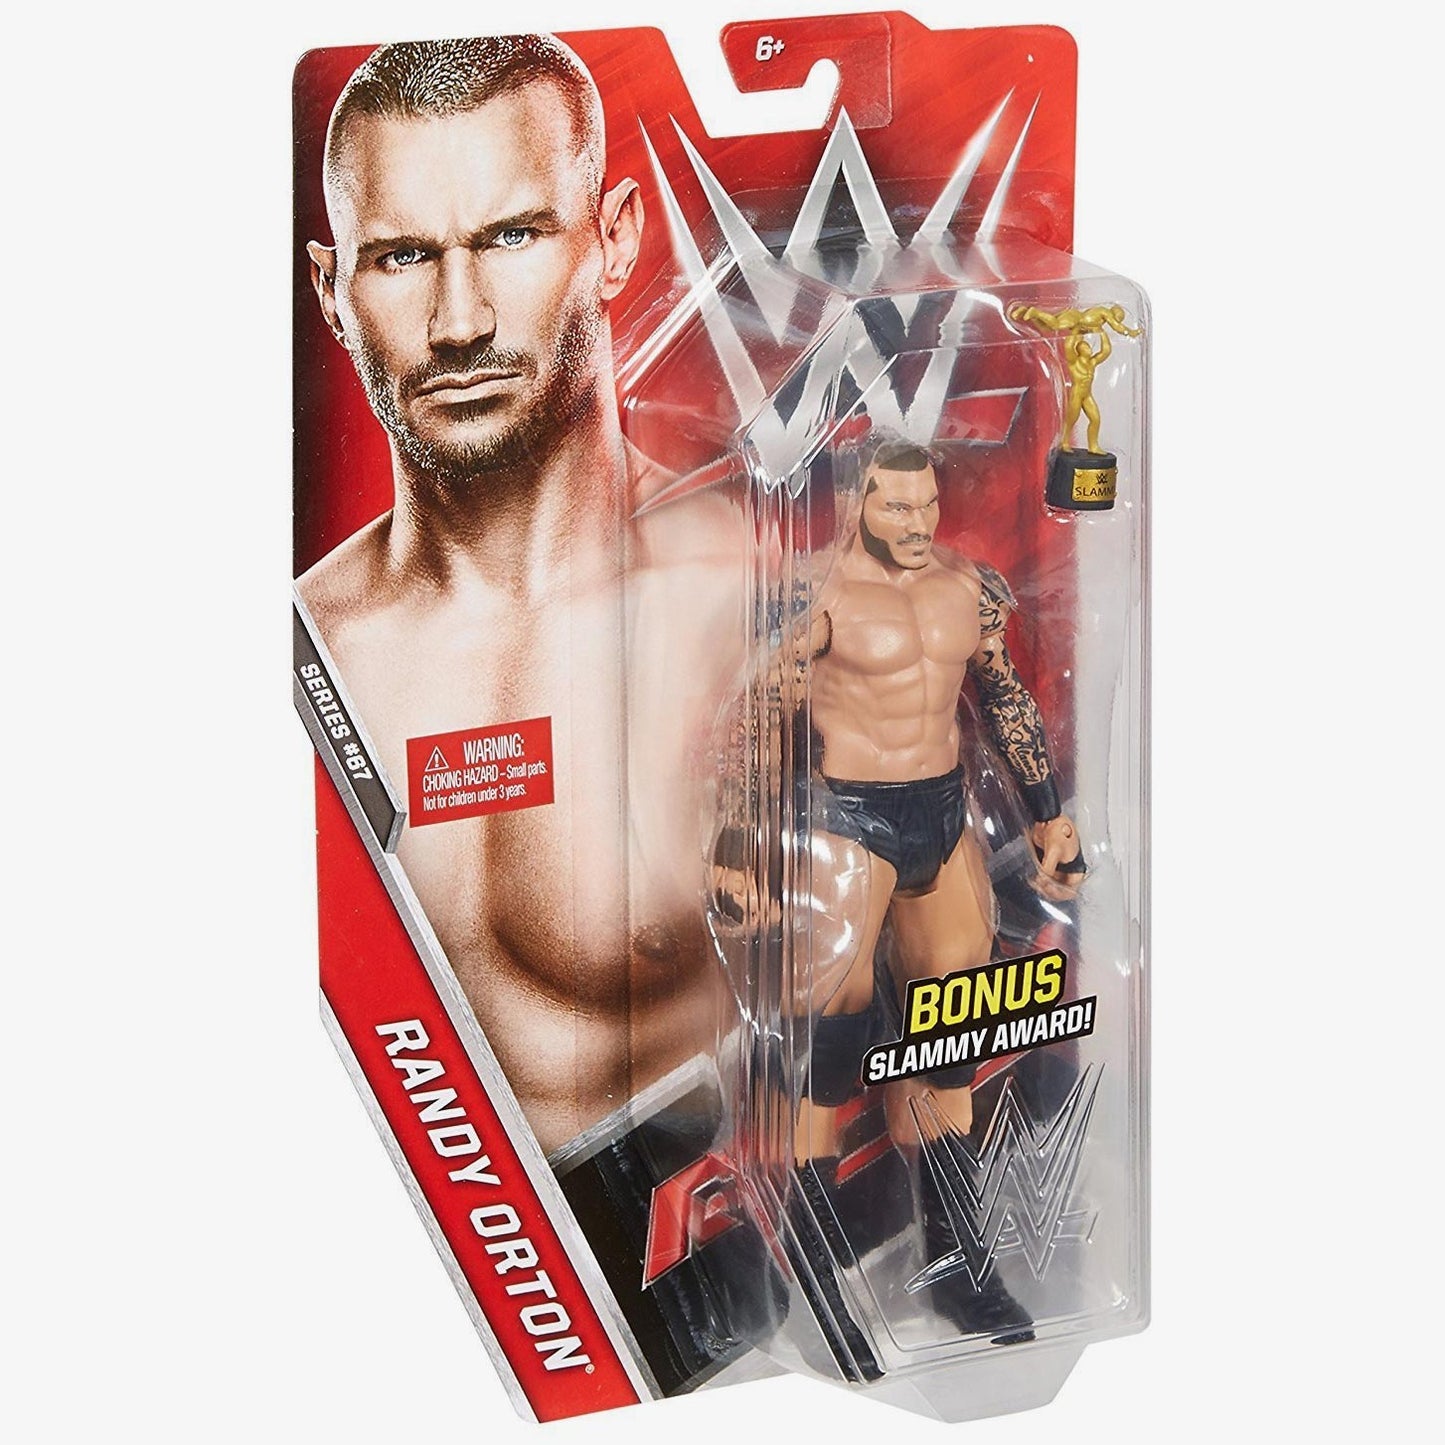 Randy Orton - WWE Basic Series #67 (With Bonus Slammy Award)